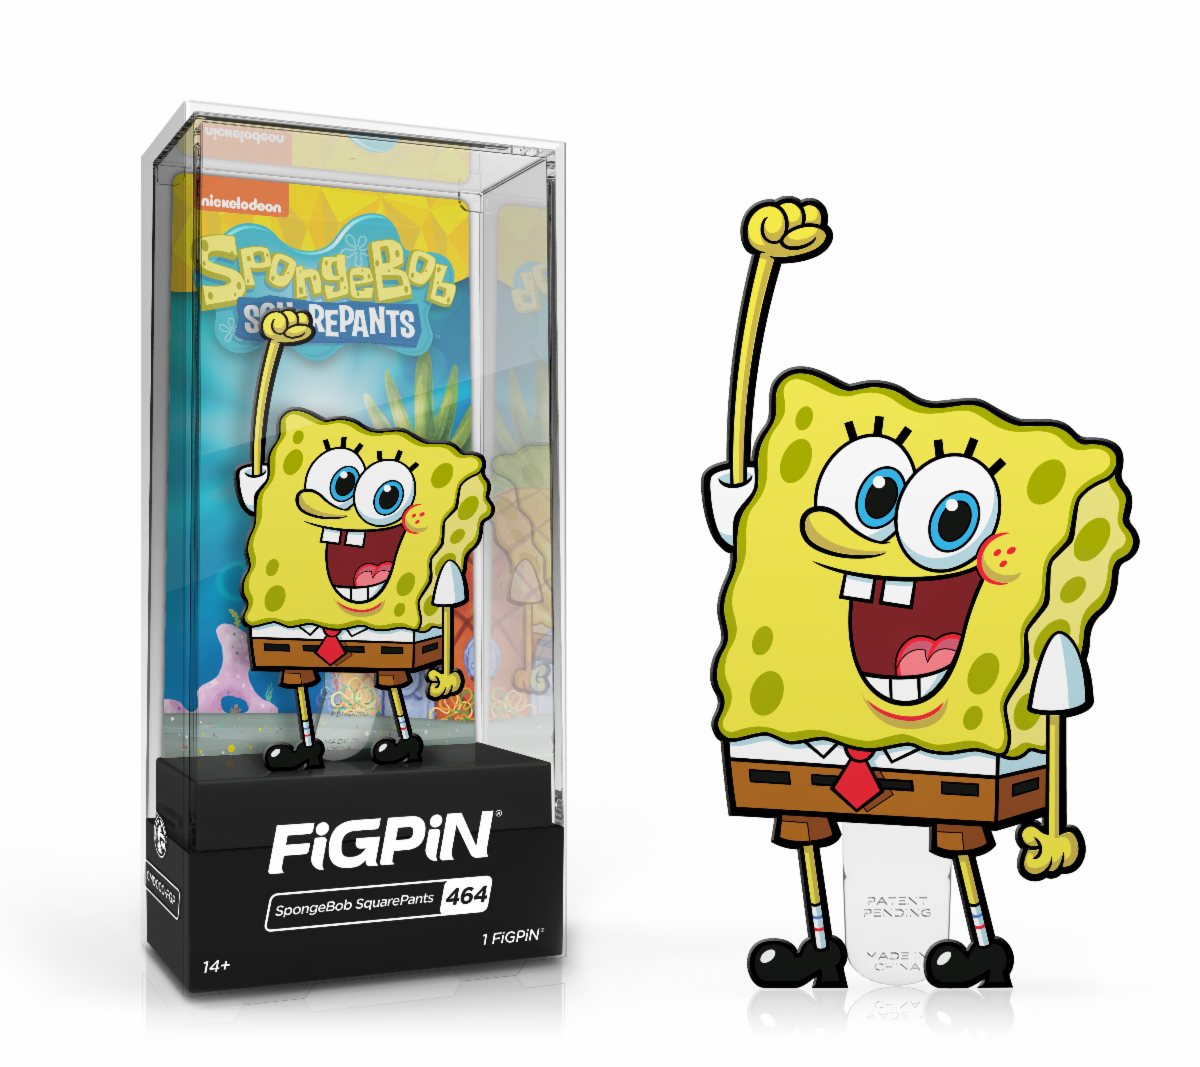 FiGPiN Classic: Spongebob - Spongebob Squarepants #464